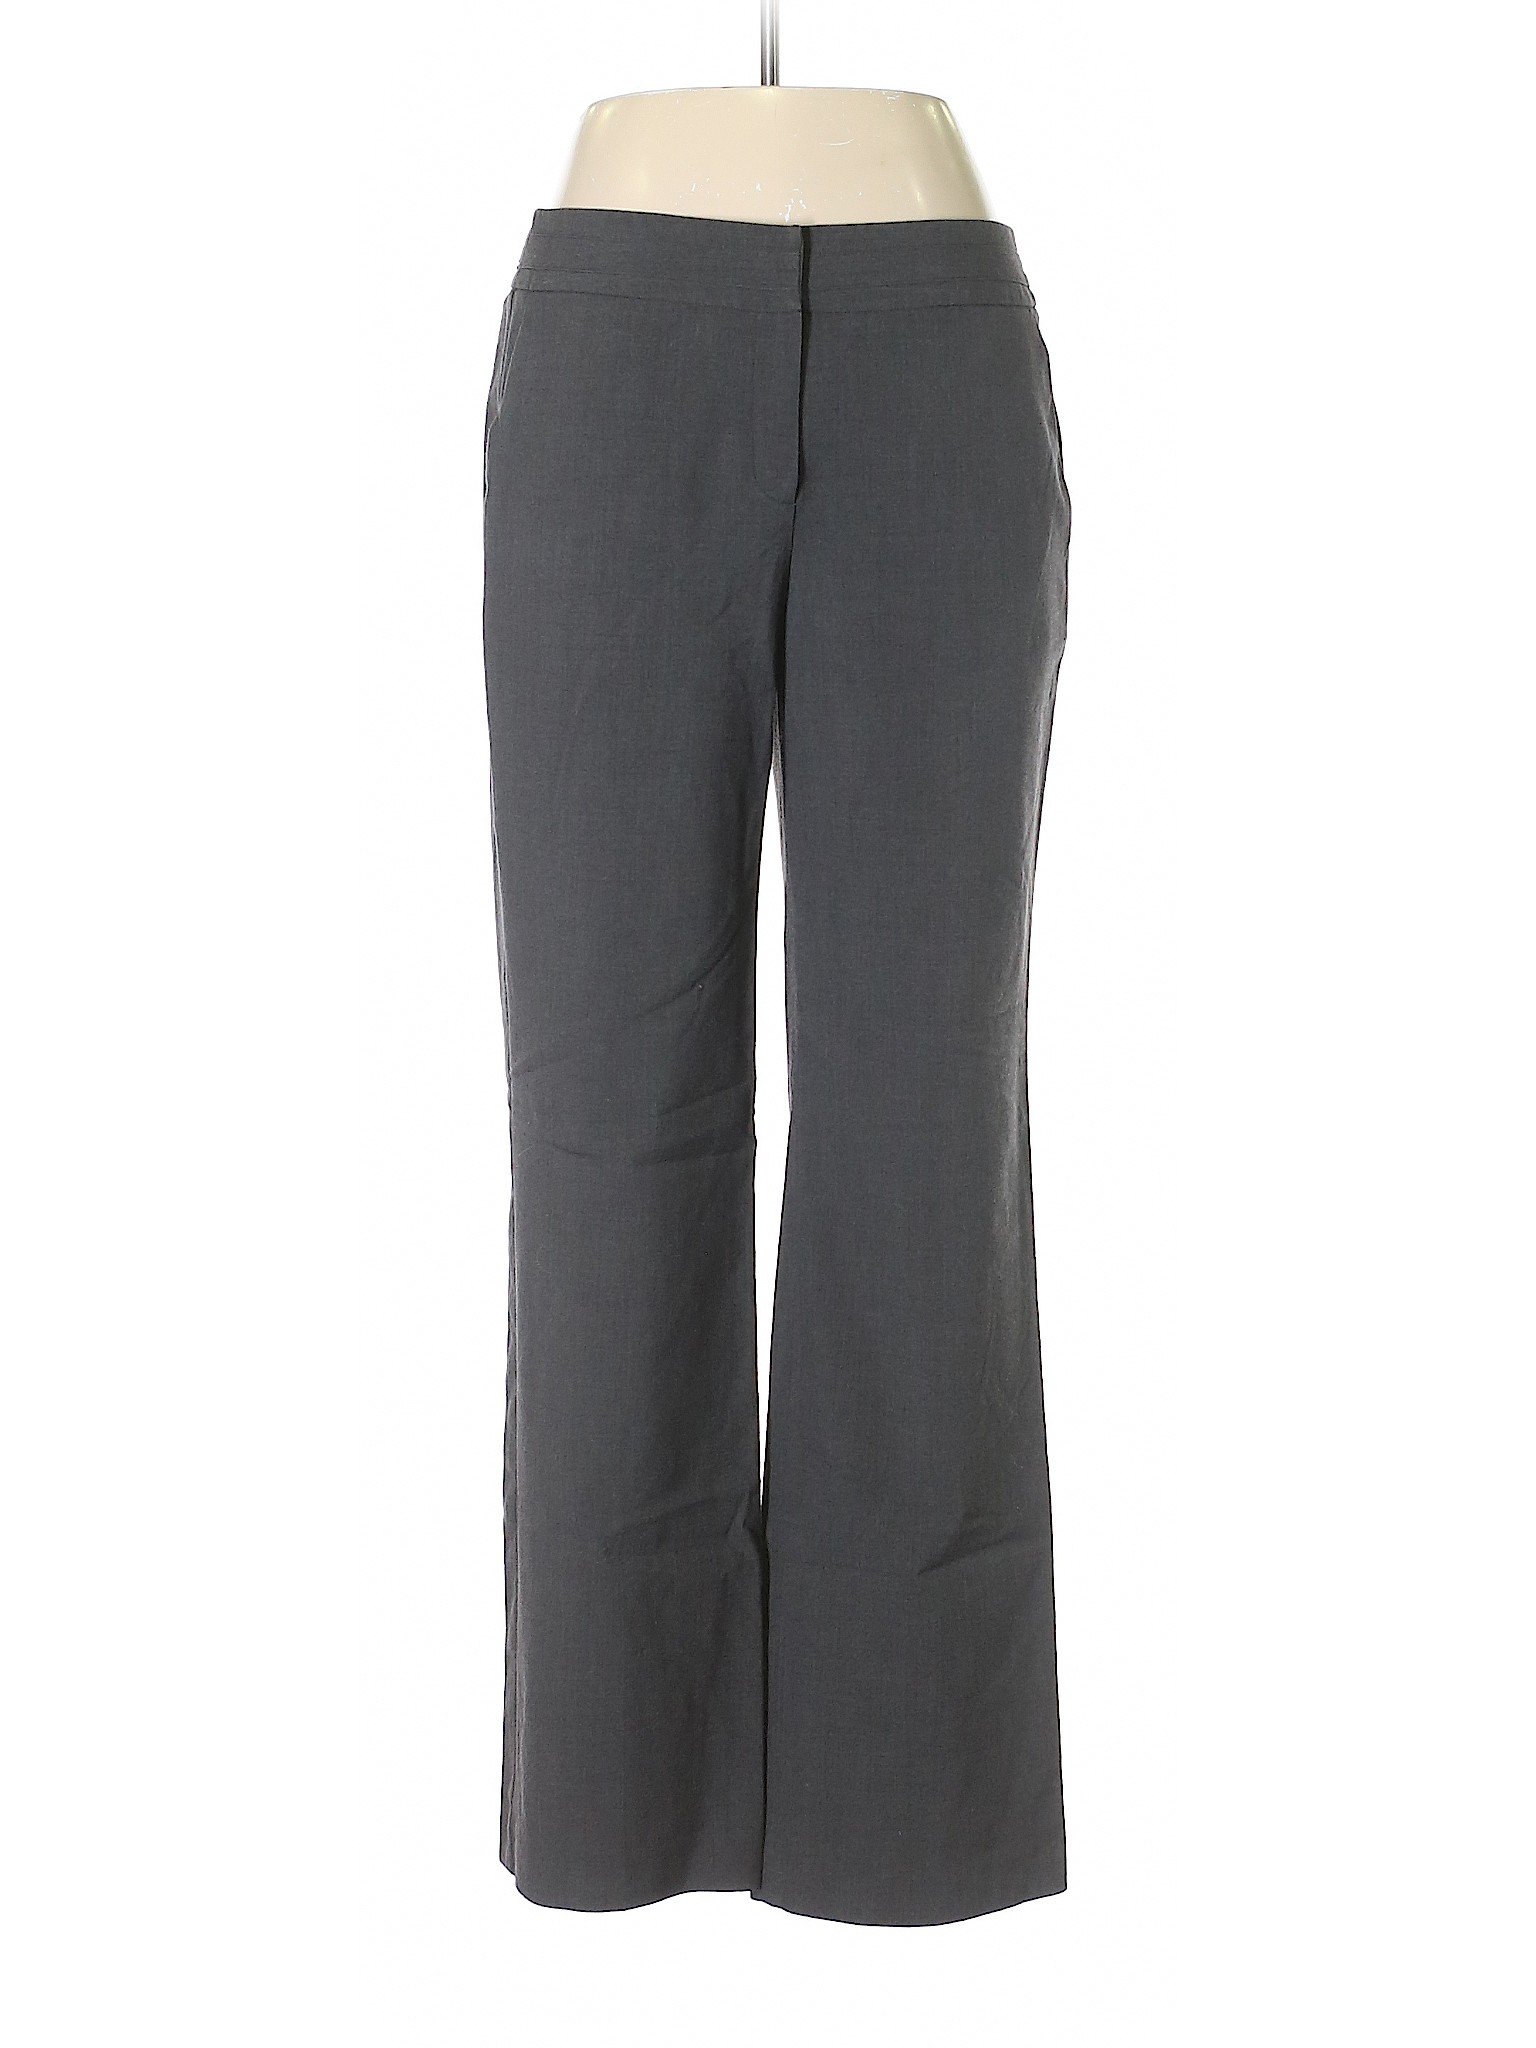 Sharagano Women Gray Dress Pants 10 | eBay